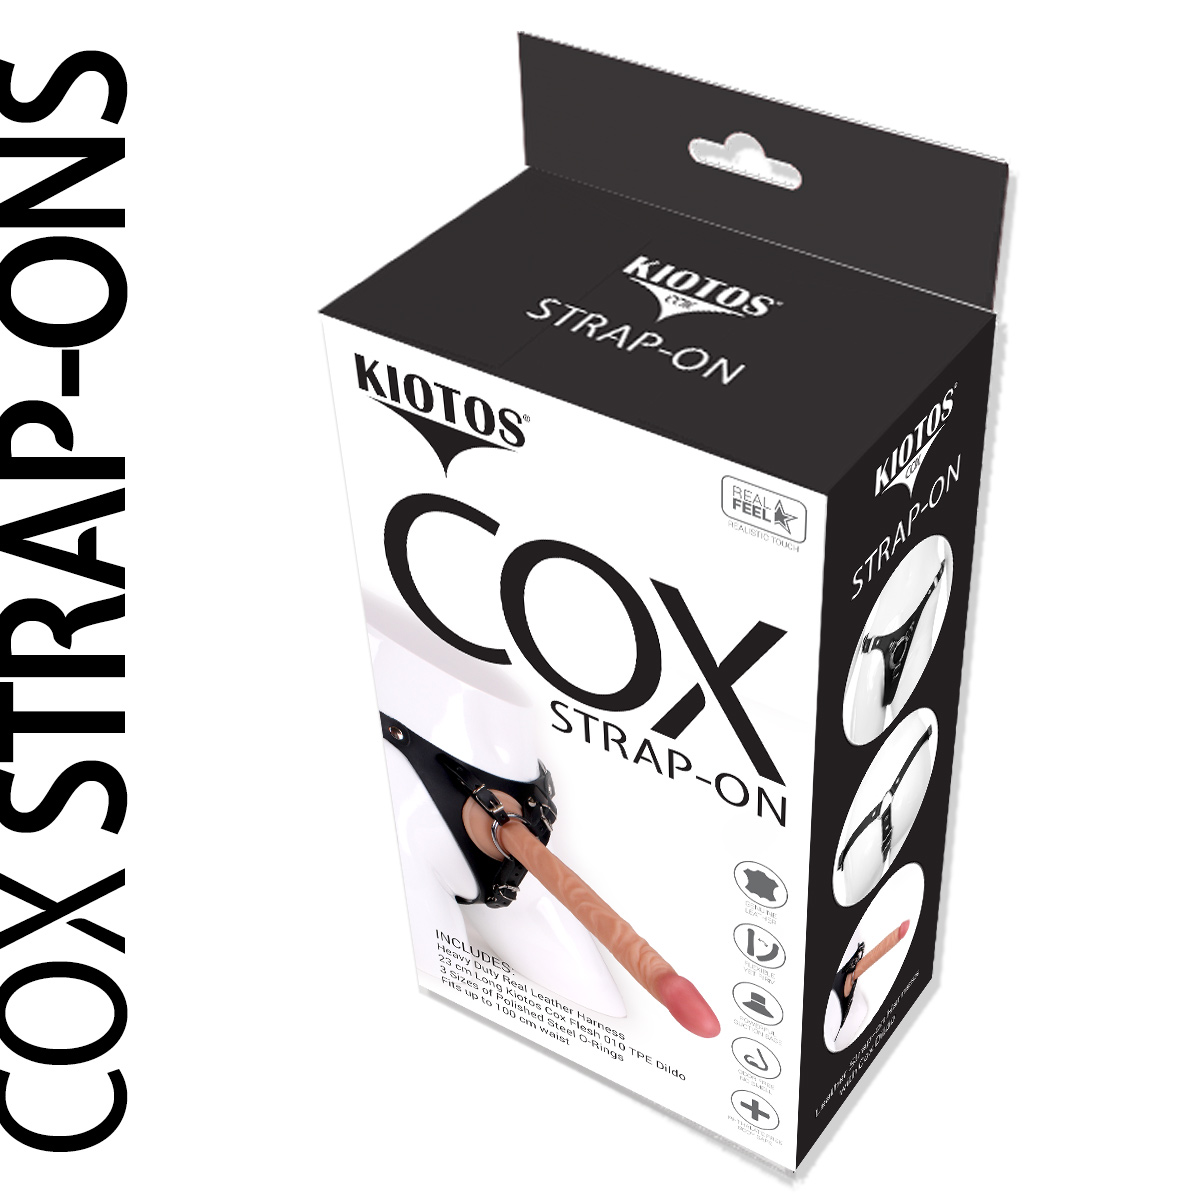 Kiotos-COX-Strap-On-Dildo-Flesh-010-OPR-307906-4